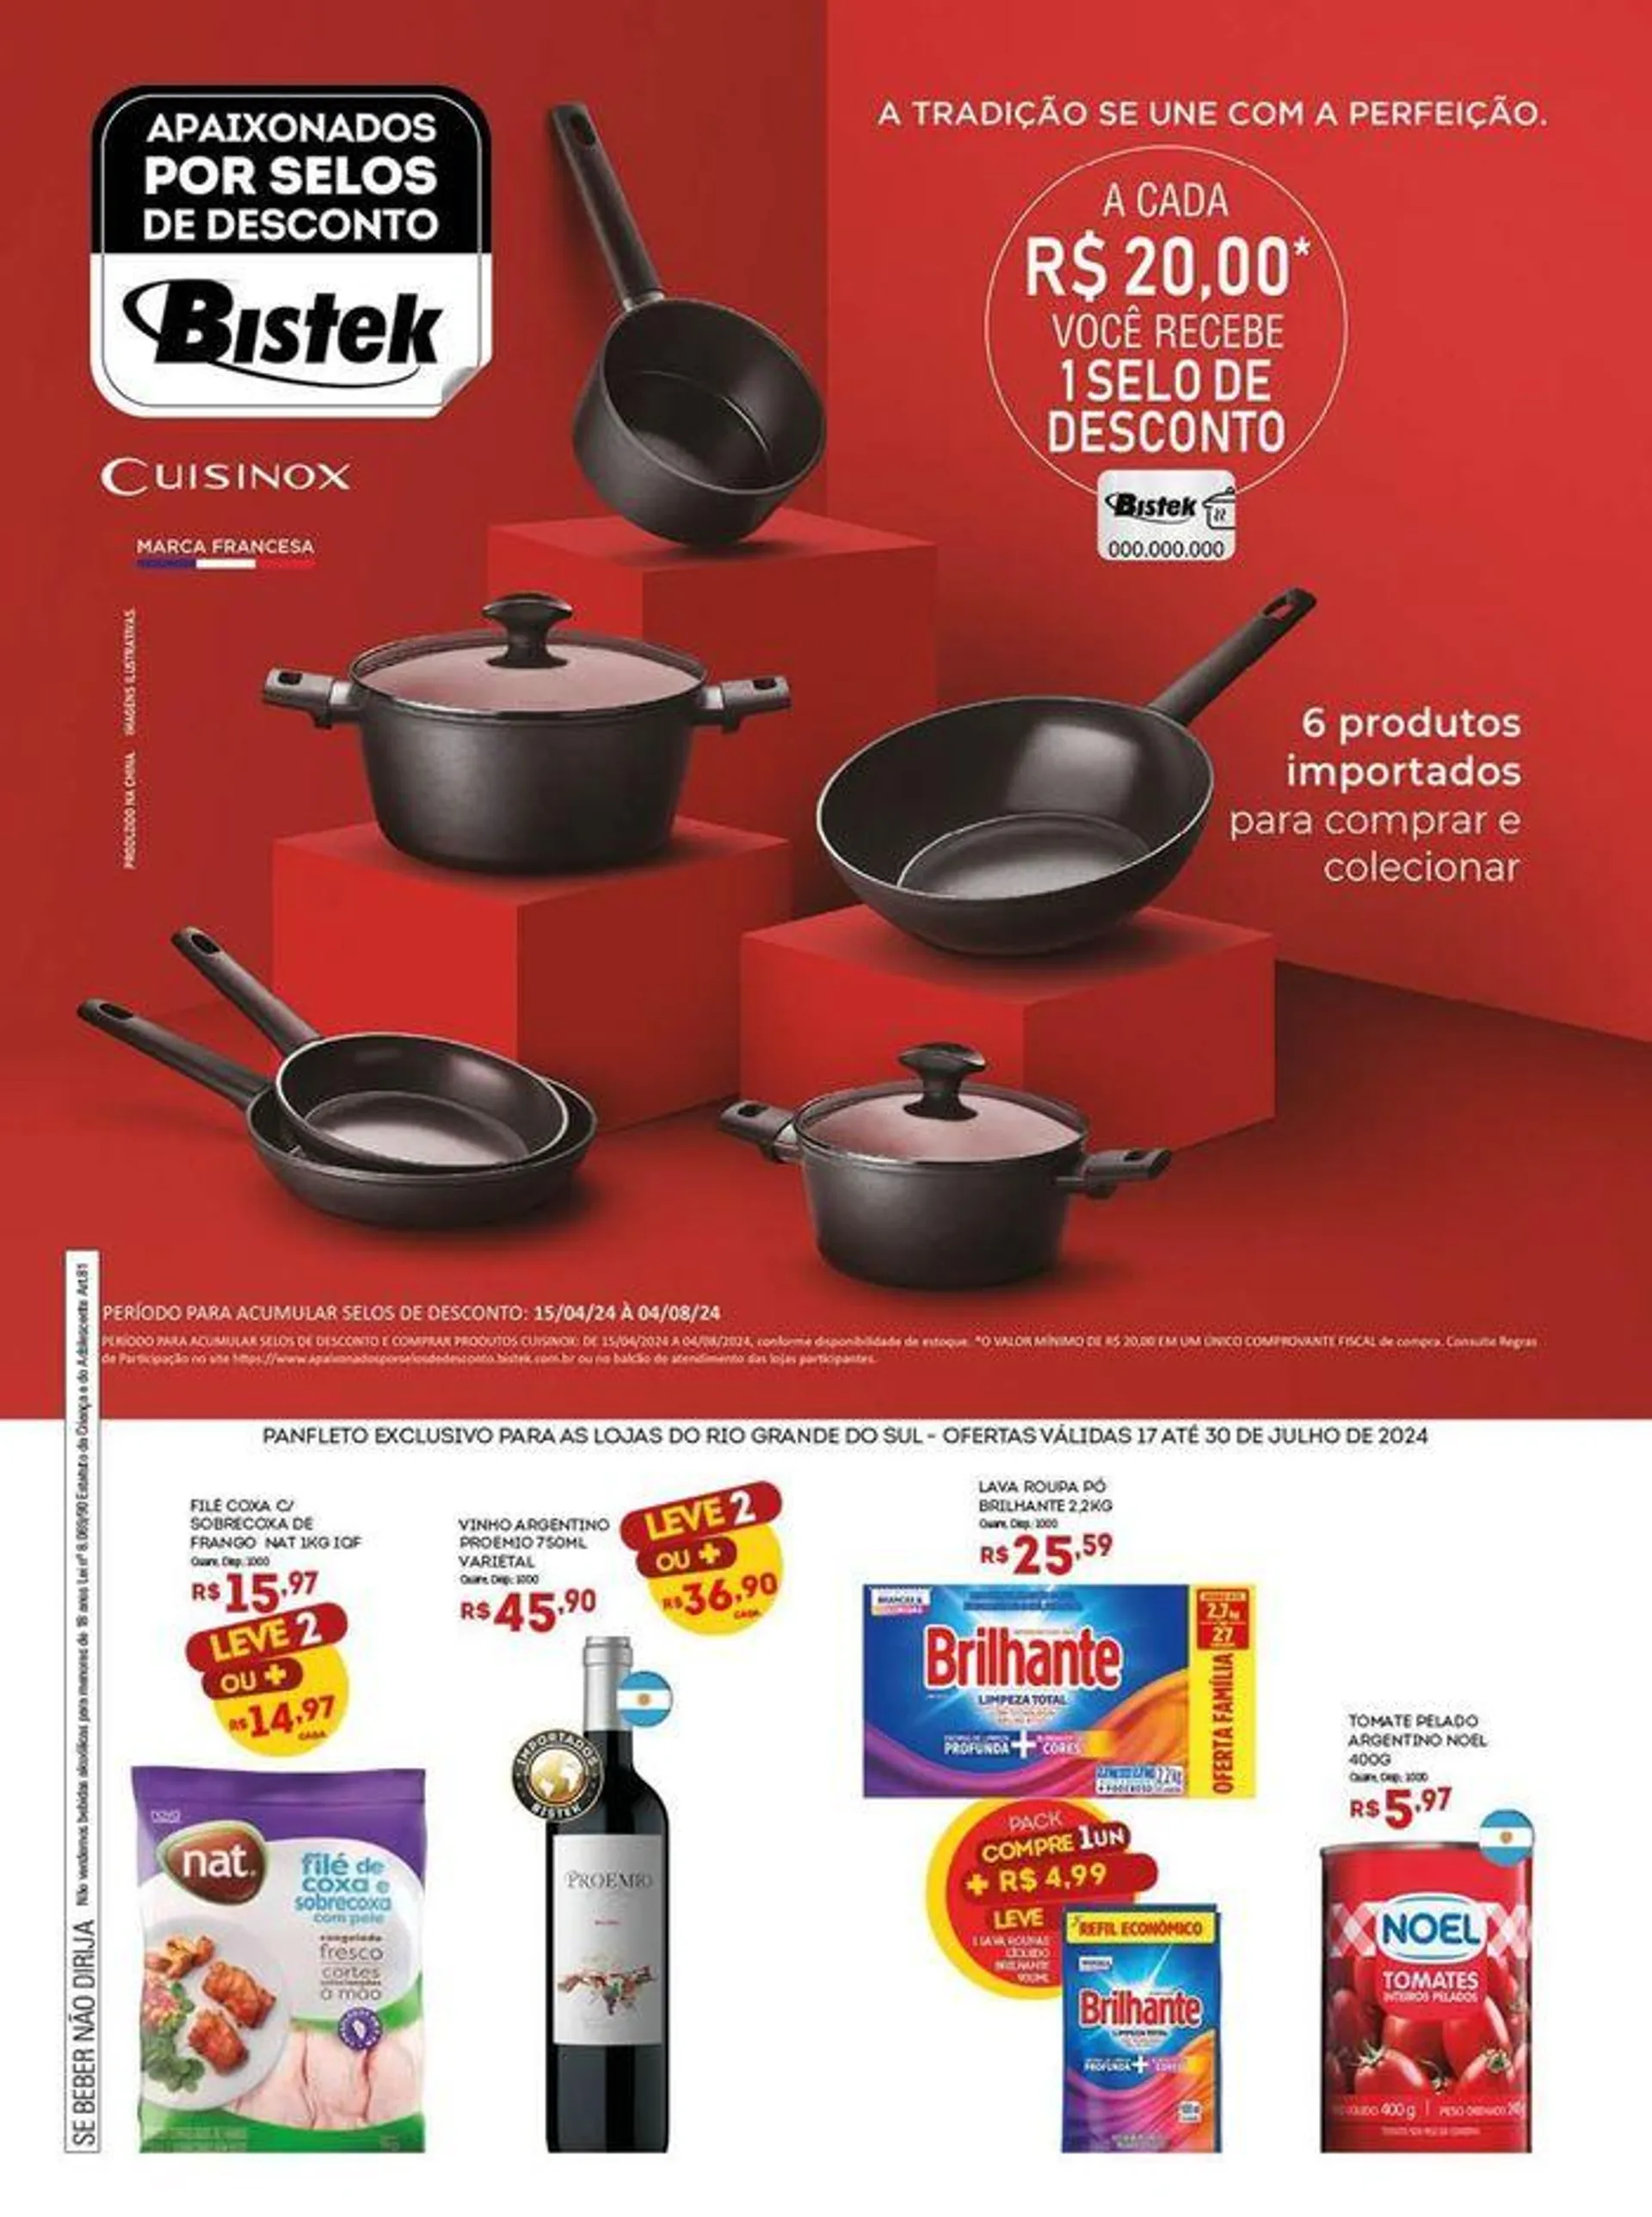 Ofertas Bistek Supermercados - 1